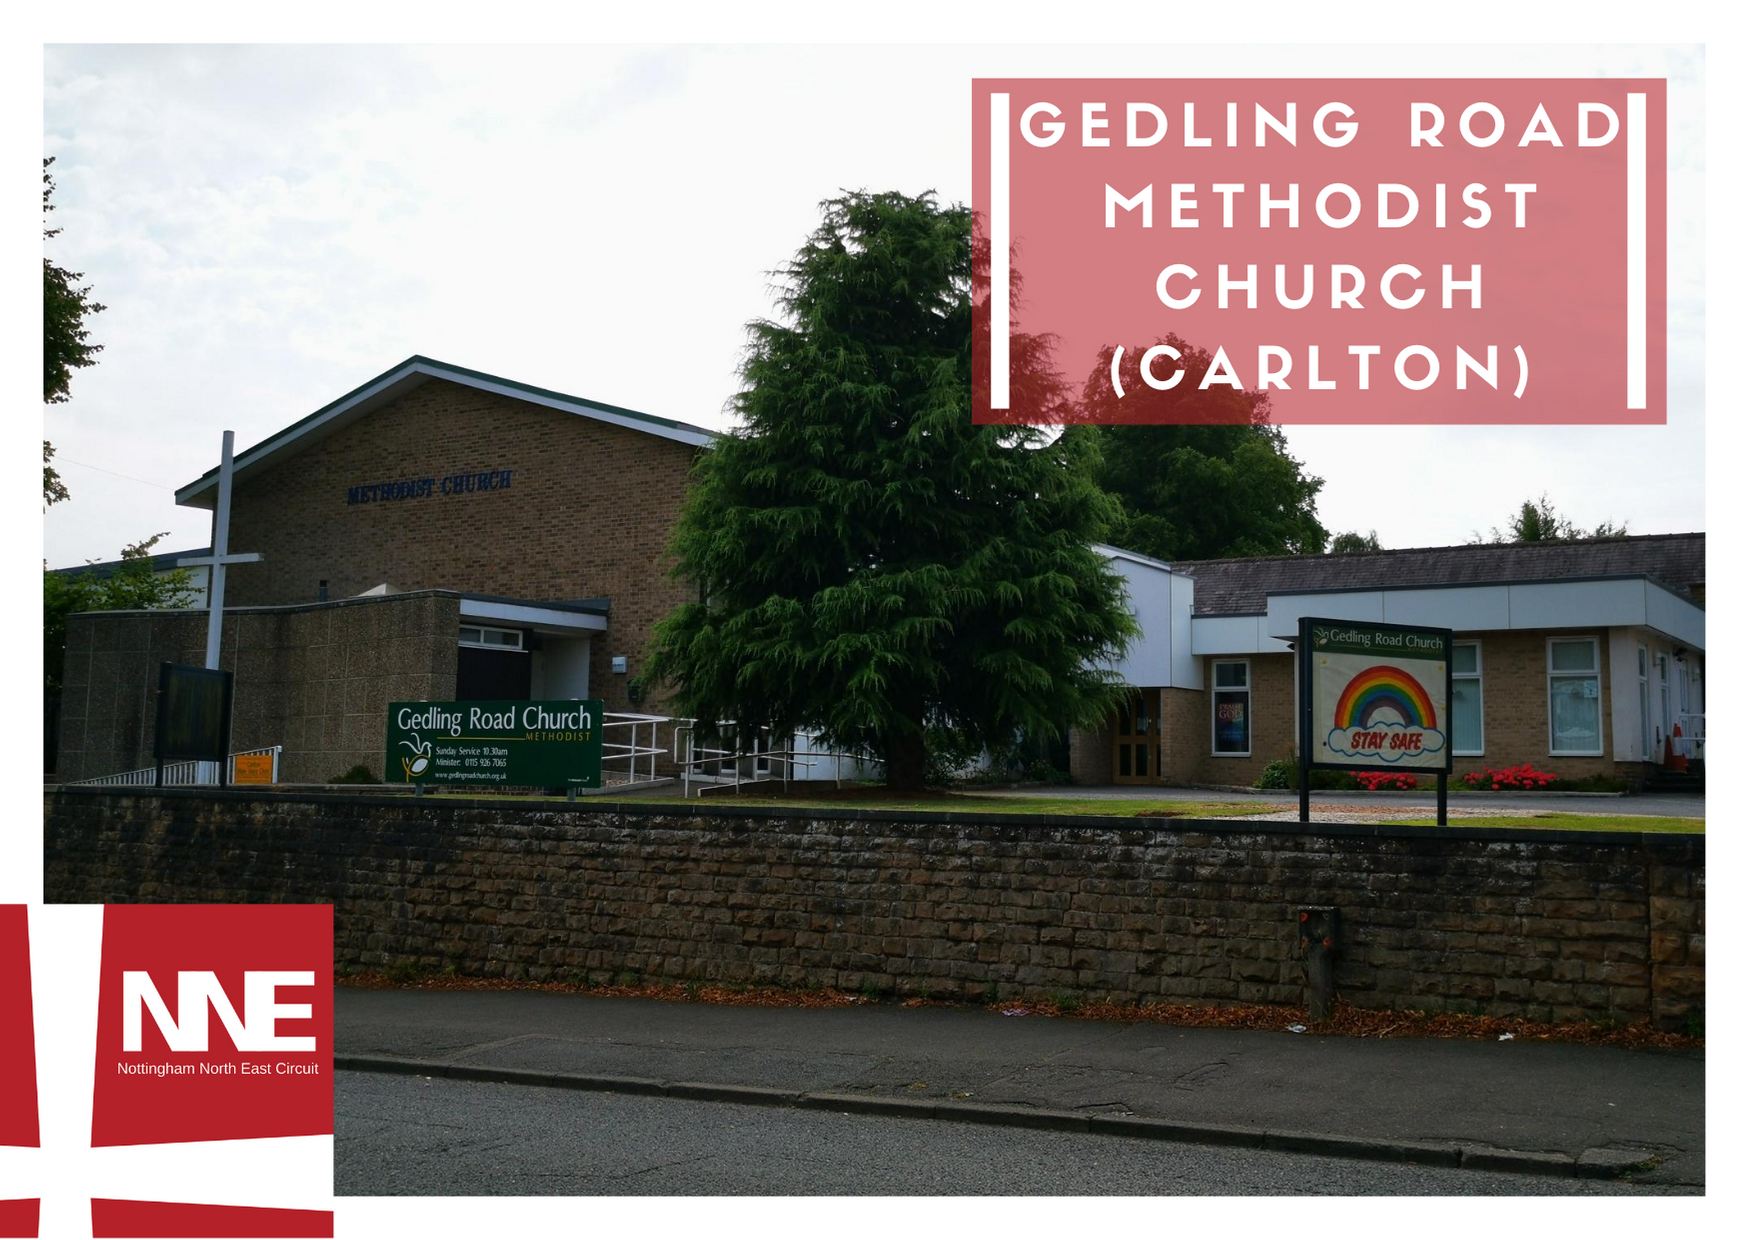 Gedling Road Methodist Church